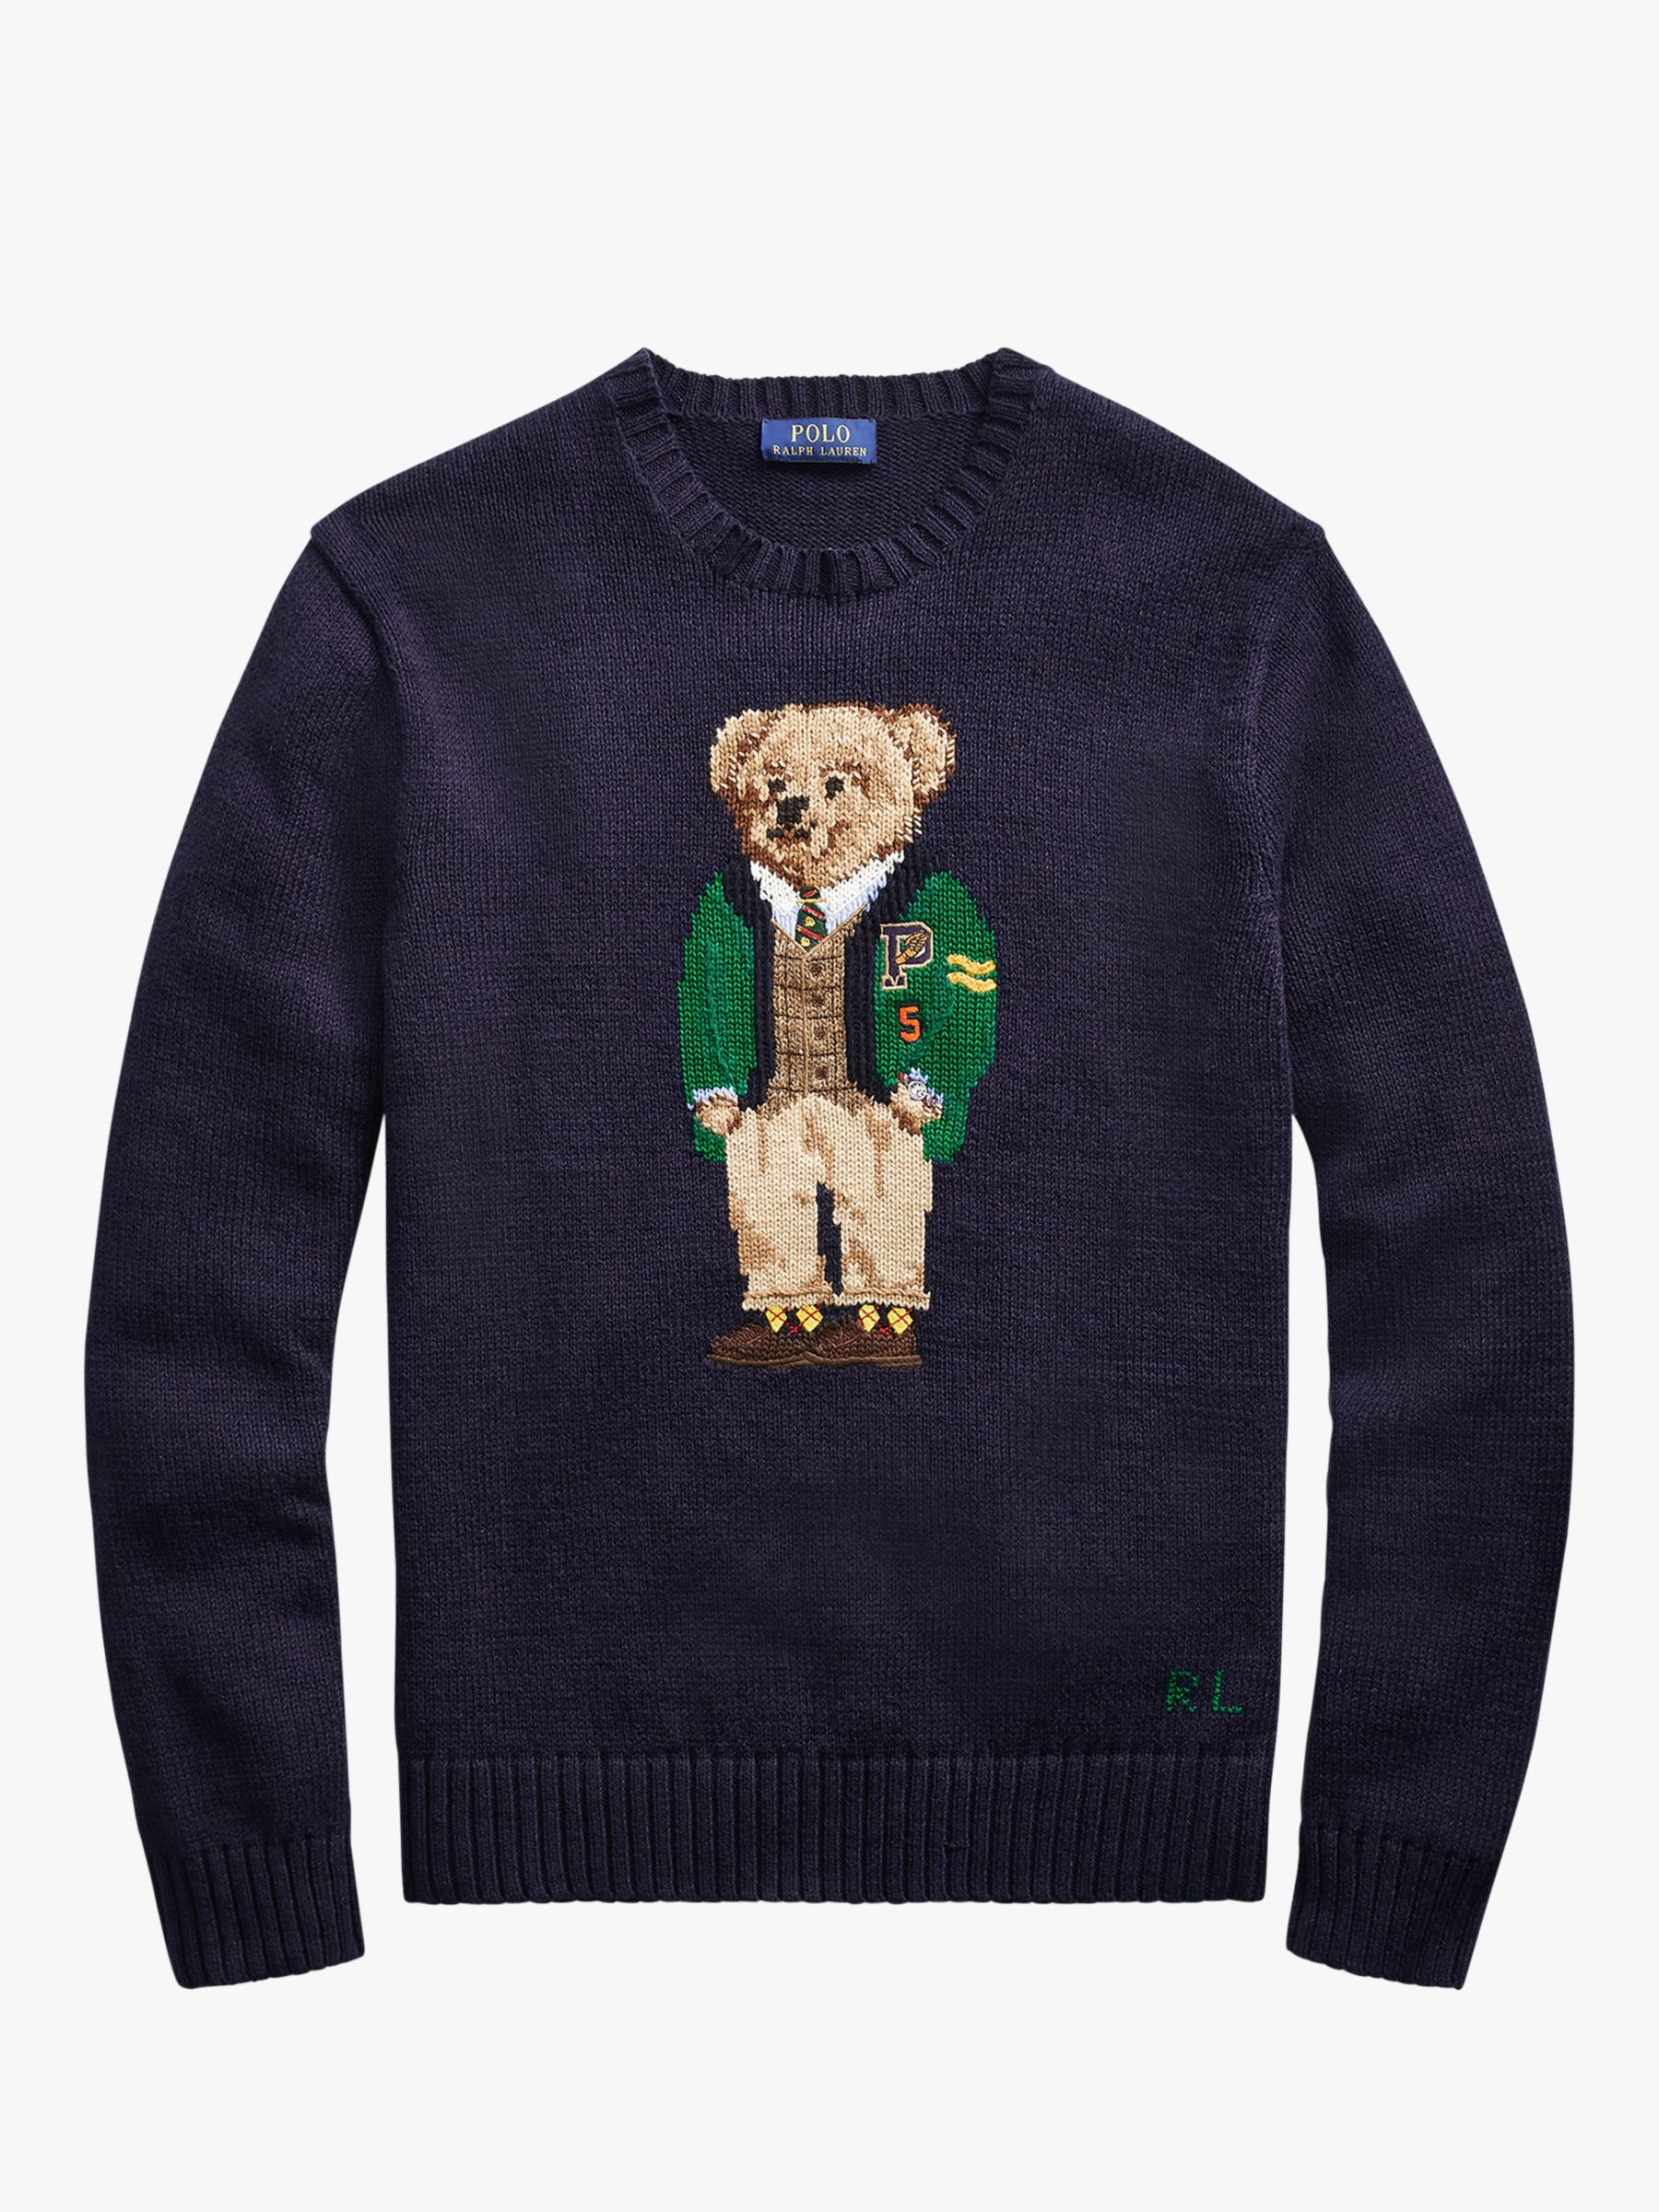 Polo Ralph Lauren University Bear Sweater, Navy at John Lewis & Partners